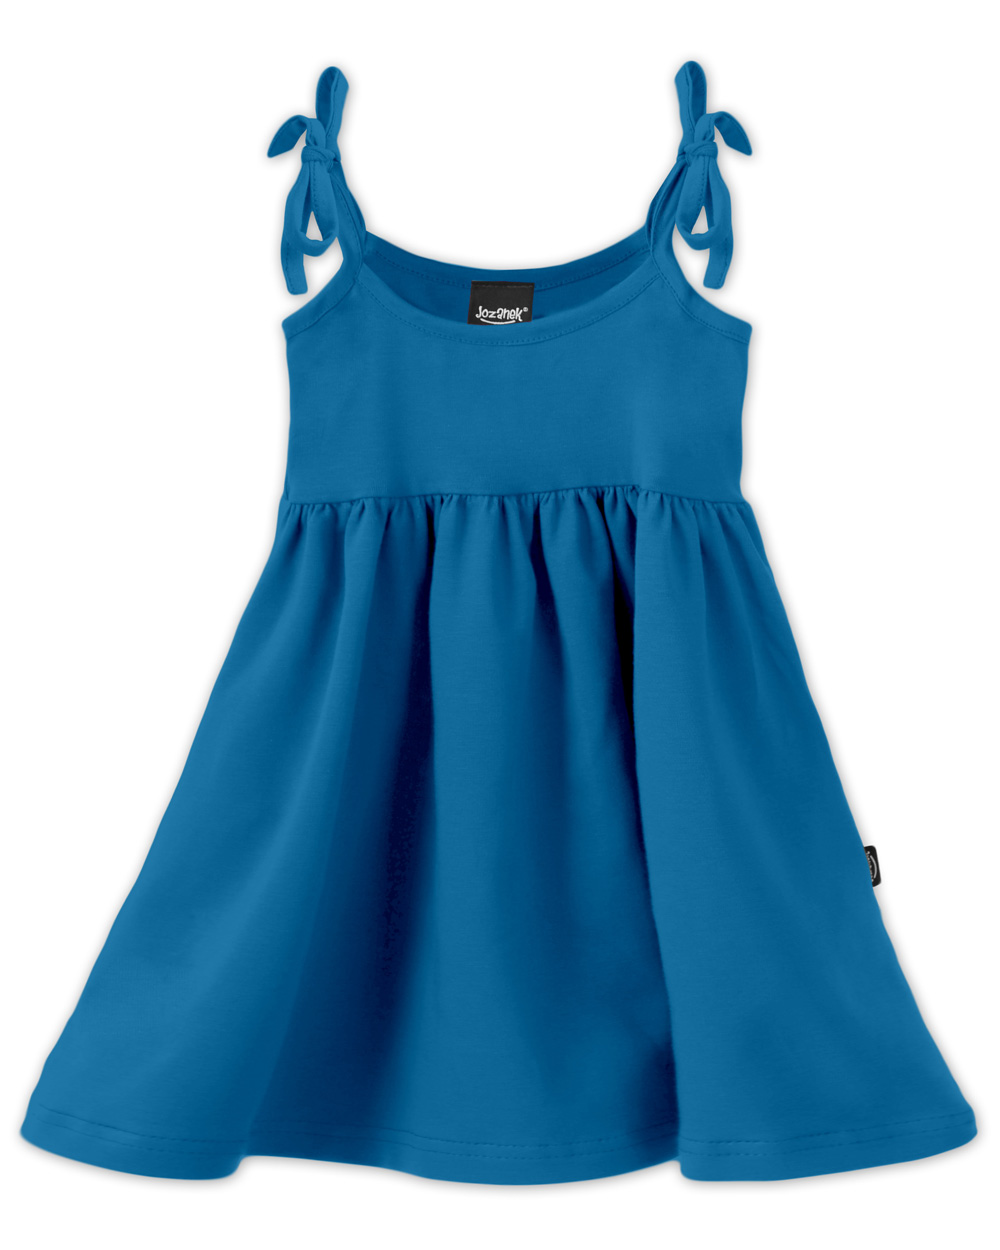 Children’s dresses, tying on shoulders, dark turquoise